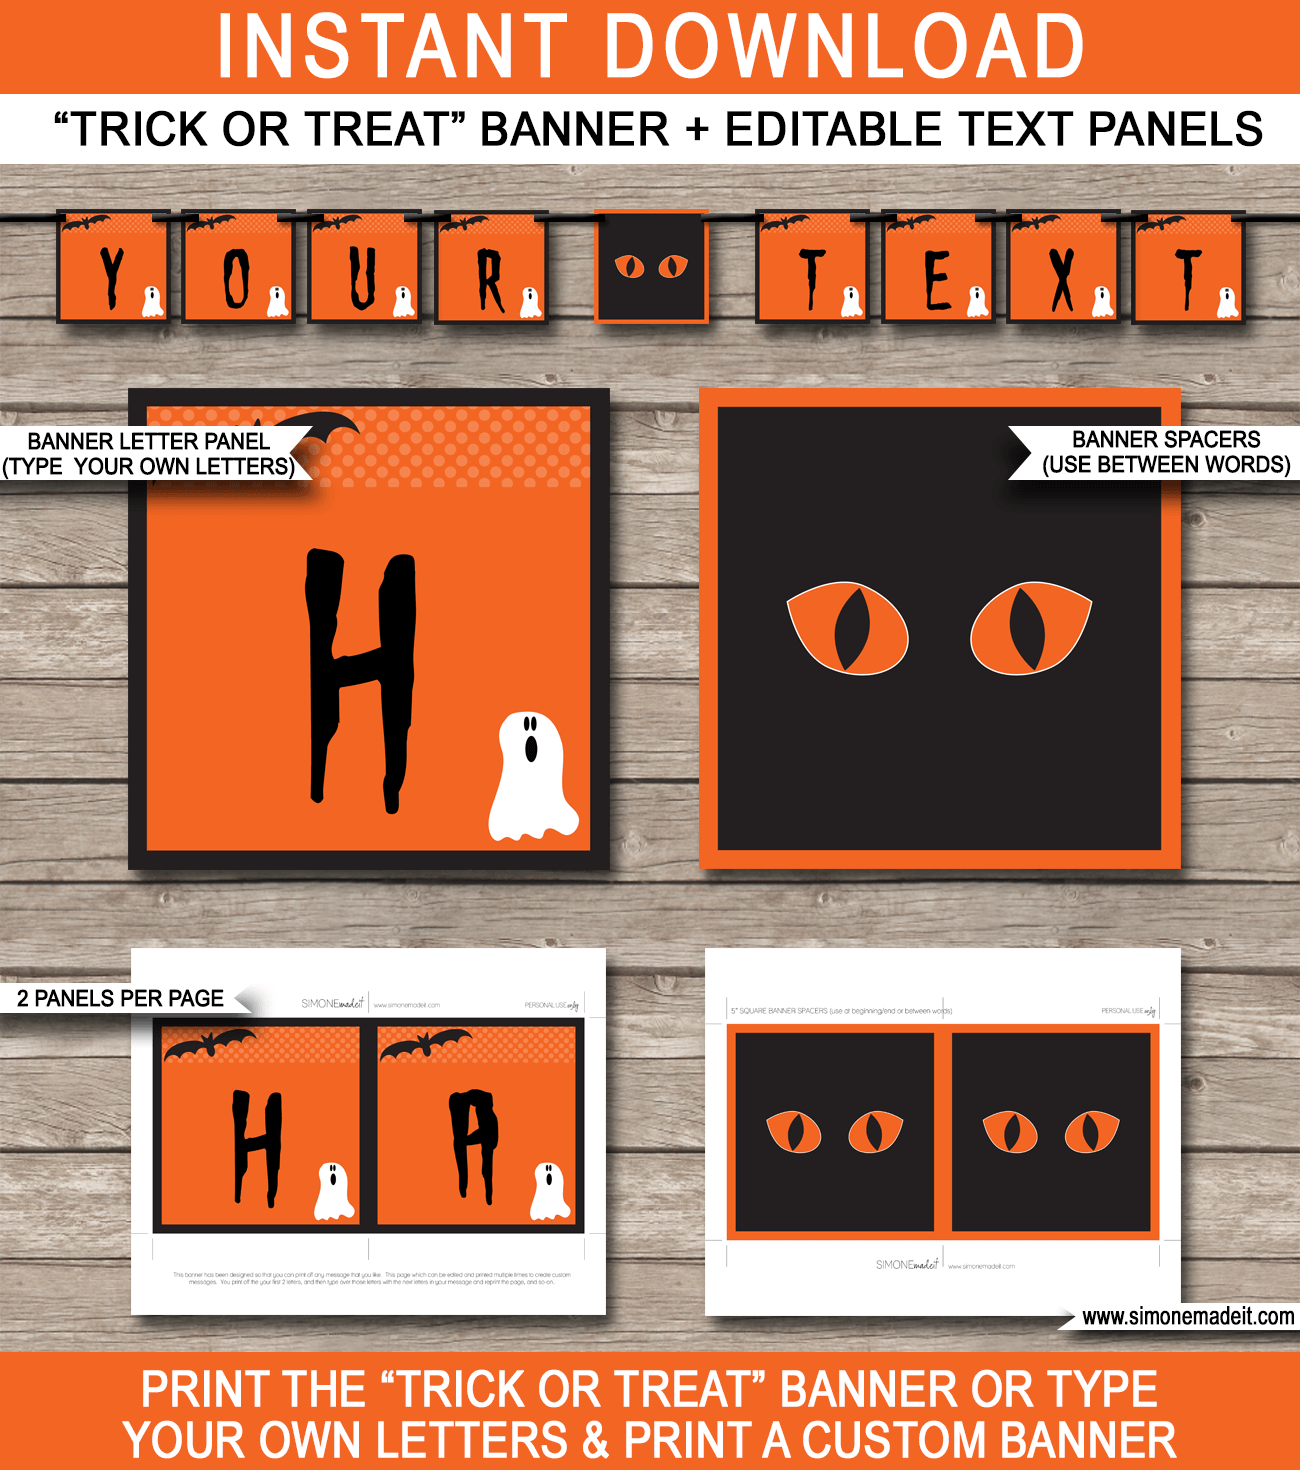 Printable Halloween Pennant Banner Template - Halloween Trick or Treat Bunting - DIY Editable Text - INSTANT DOWNLOAD $4.50 via simonemadeit.com